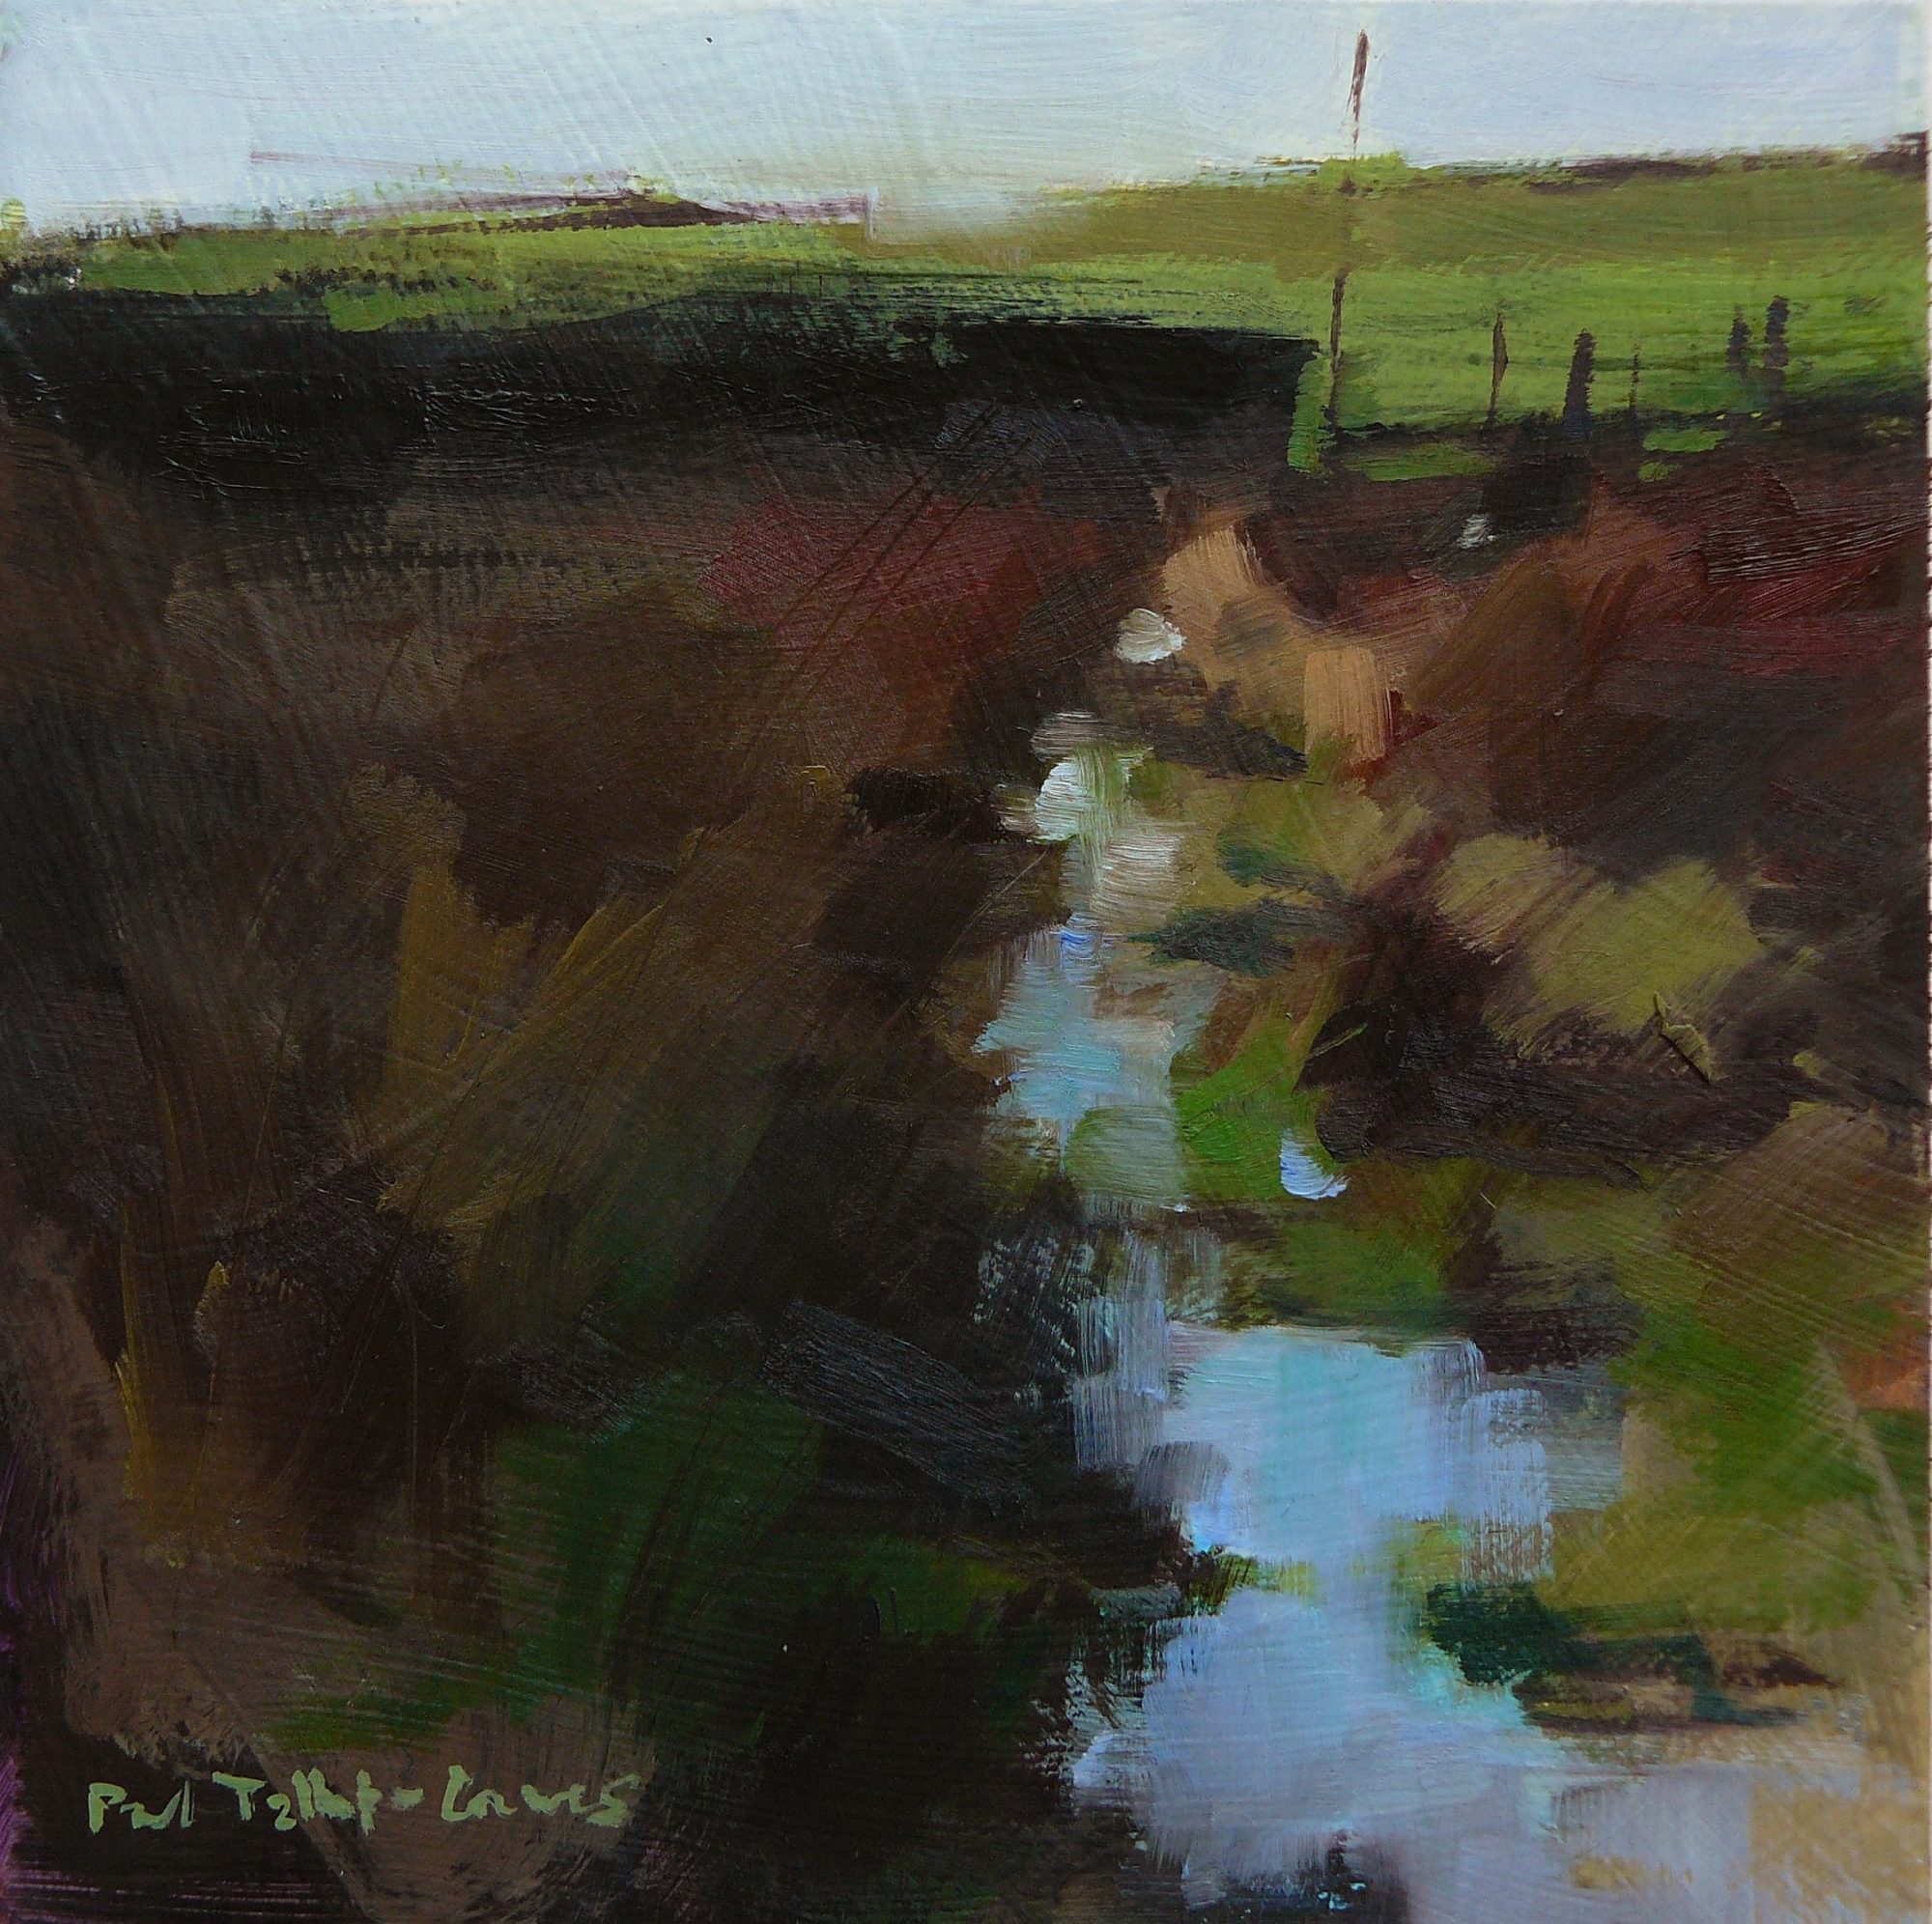 Paul-Tlabot-Greaves-Oil-painting-Calder-Valley-Hebden-Bridge-Pennines-river-moors